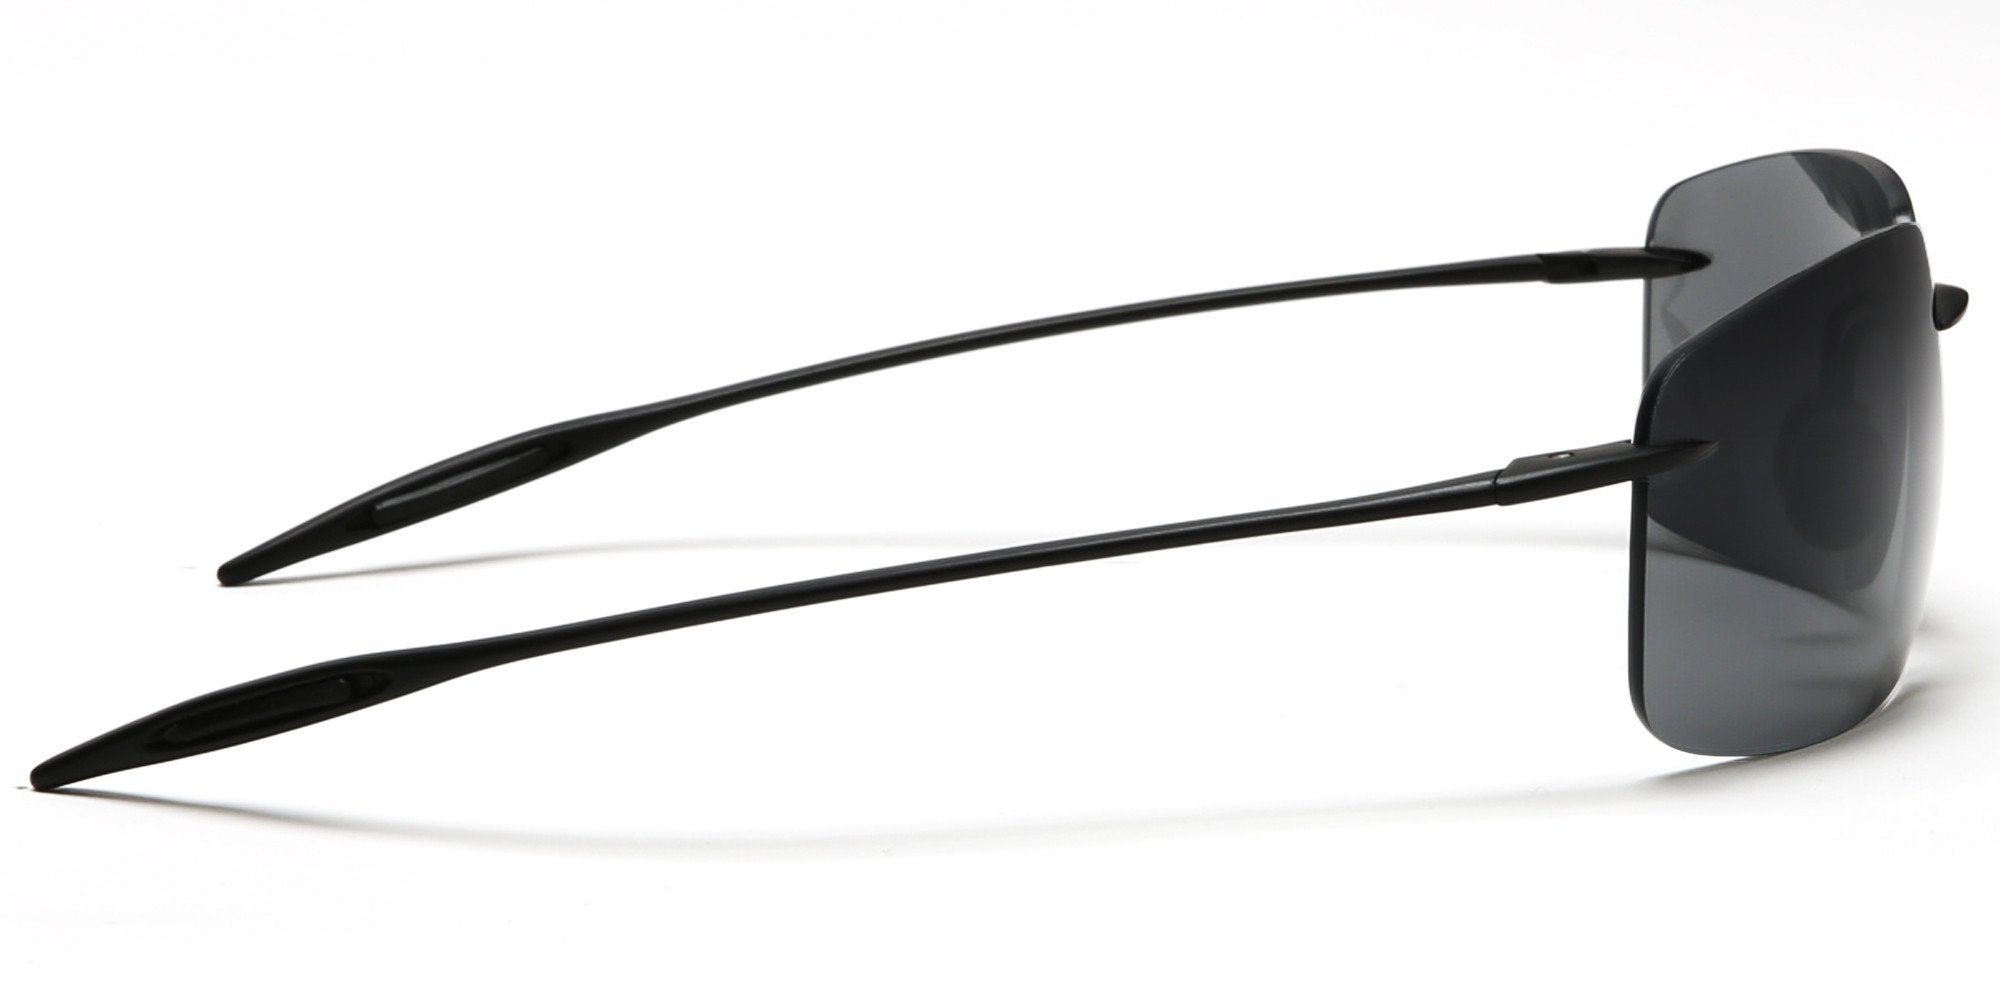 Ultra-Light Flex TR90 Sport Sunglasses Black-Samba Shades